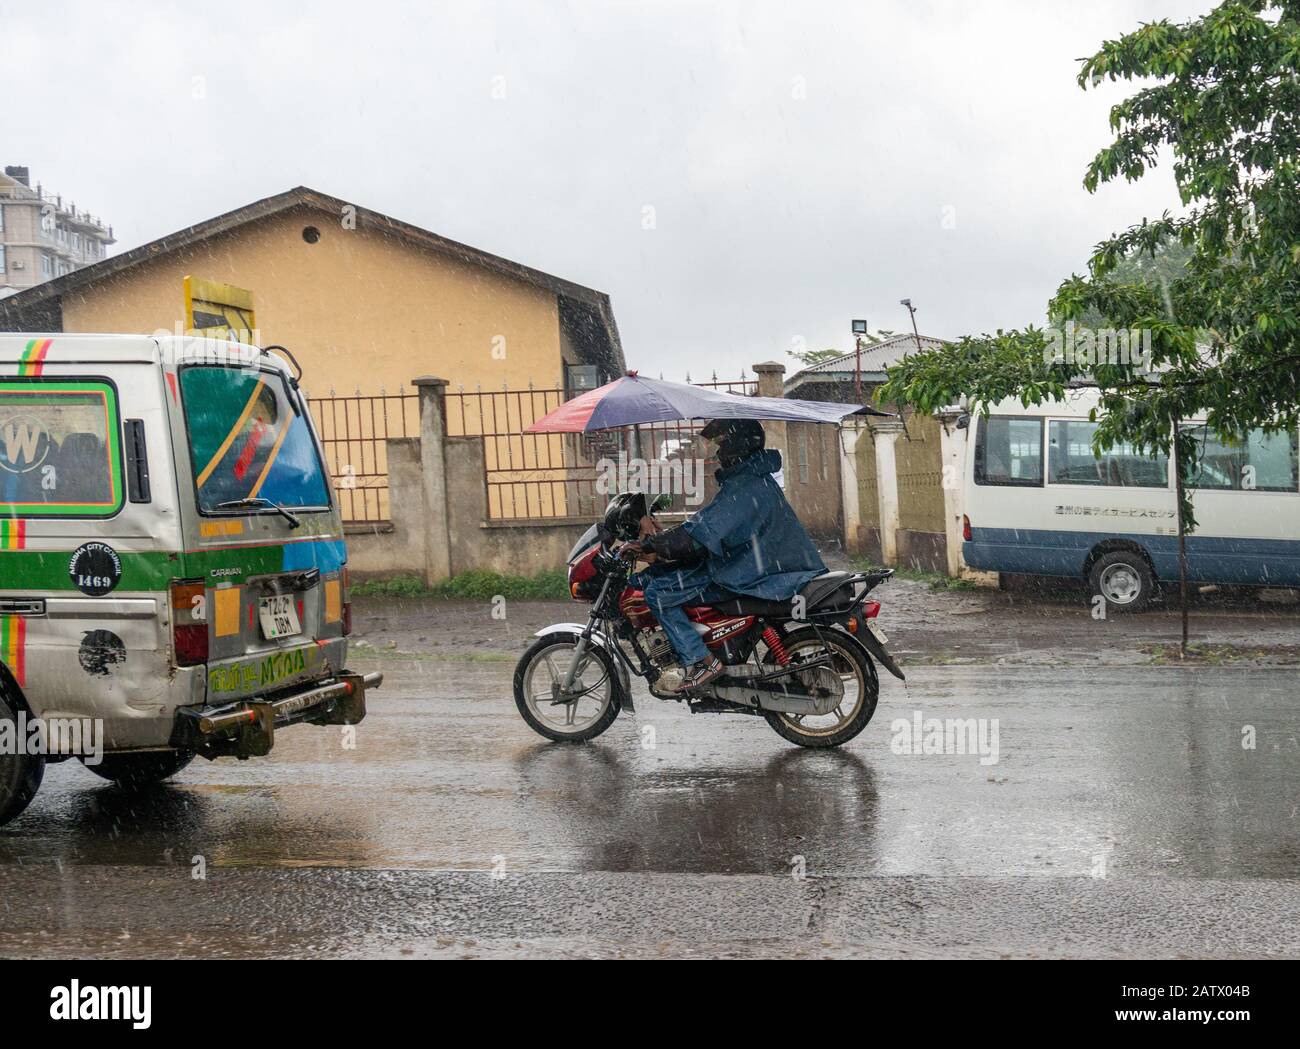 Arusha, Tanzania - 15 Jan 2020: Motorcycle with umbrella - feature of Arusha. People on the street in Arusha city, Tanzania Stock Photo